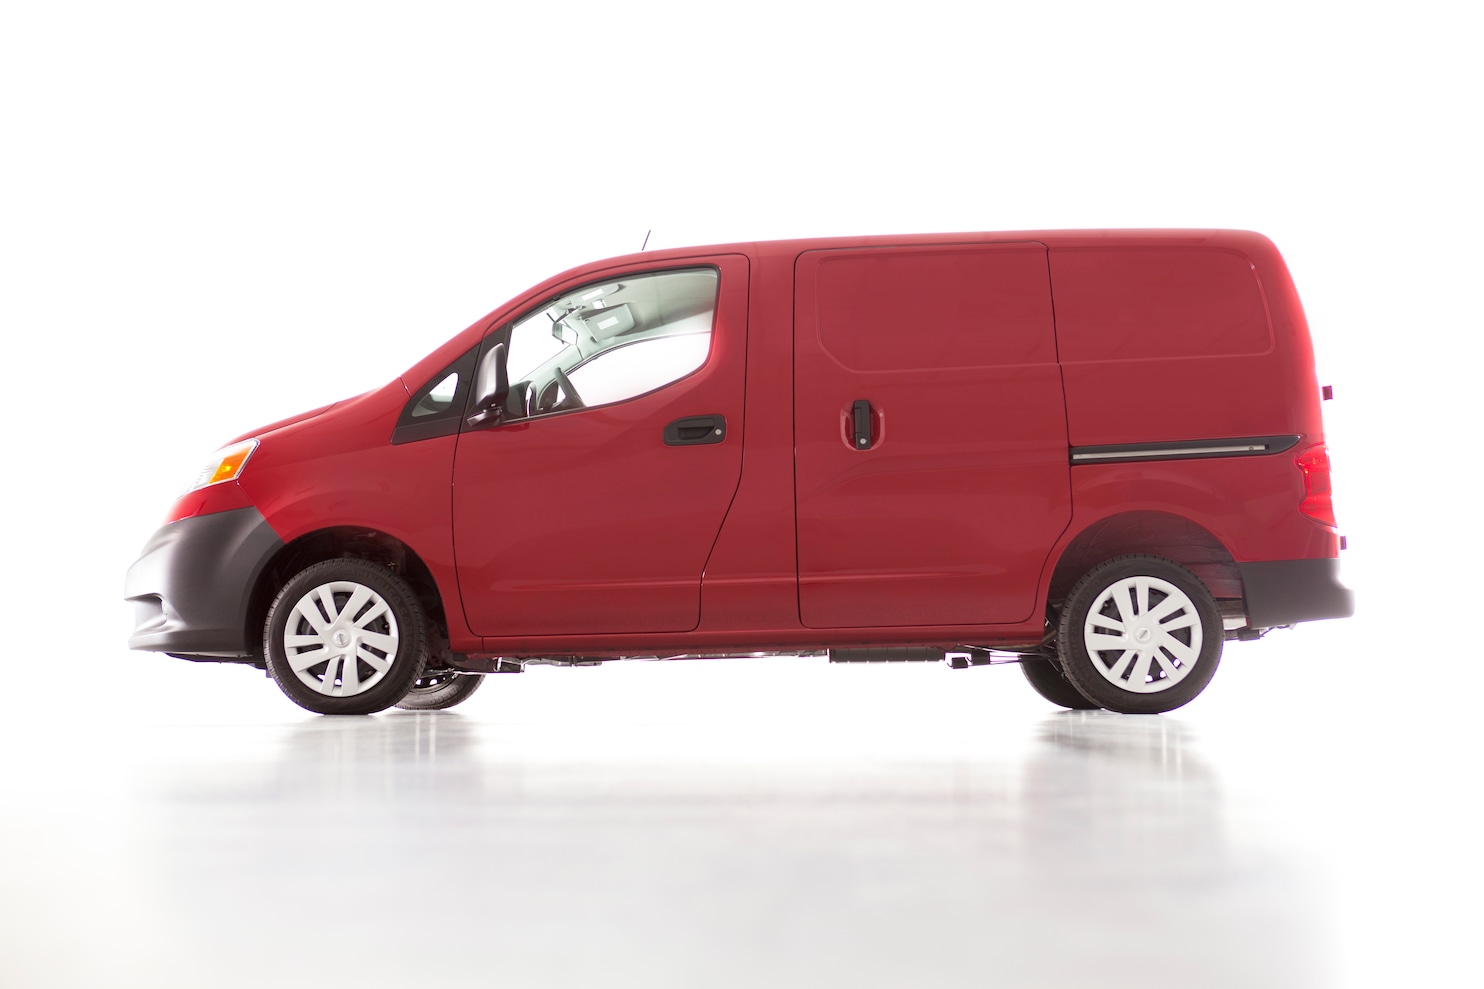 2013 Nissan NV200 cargo van: A workaday wonder - The Washington Post